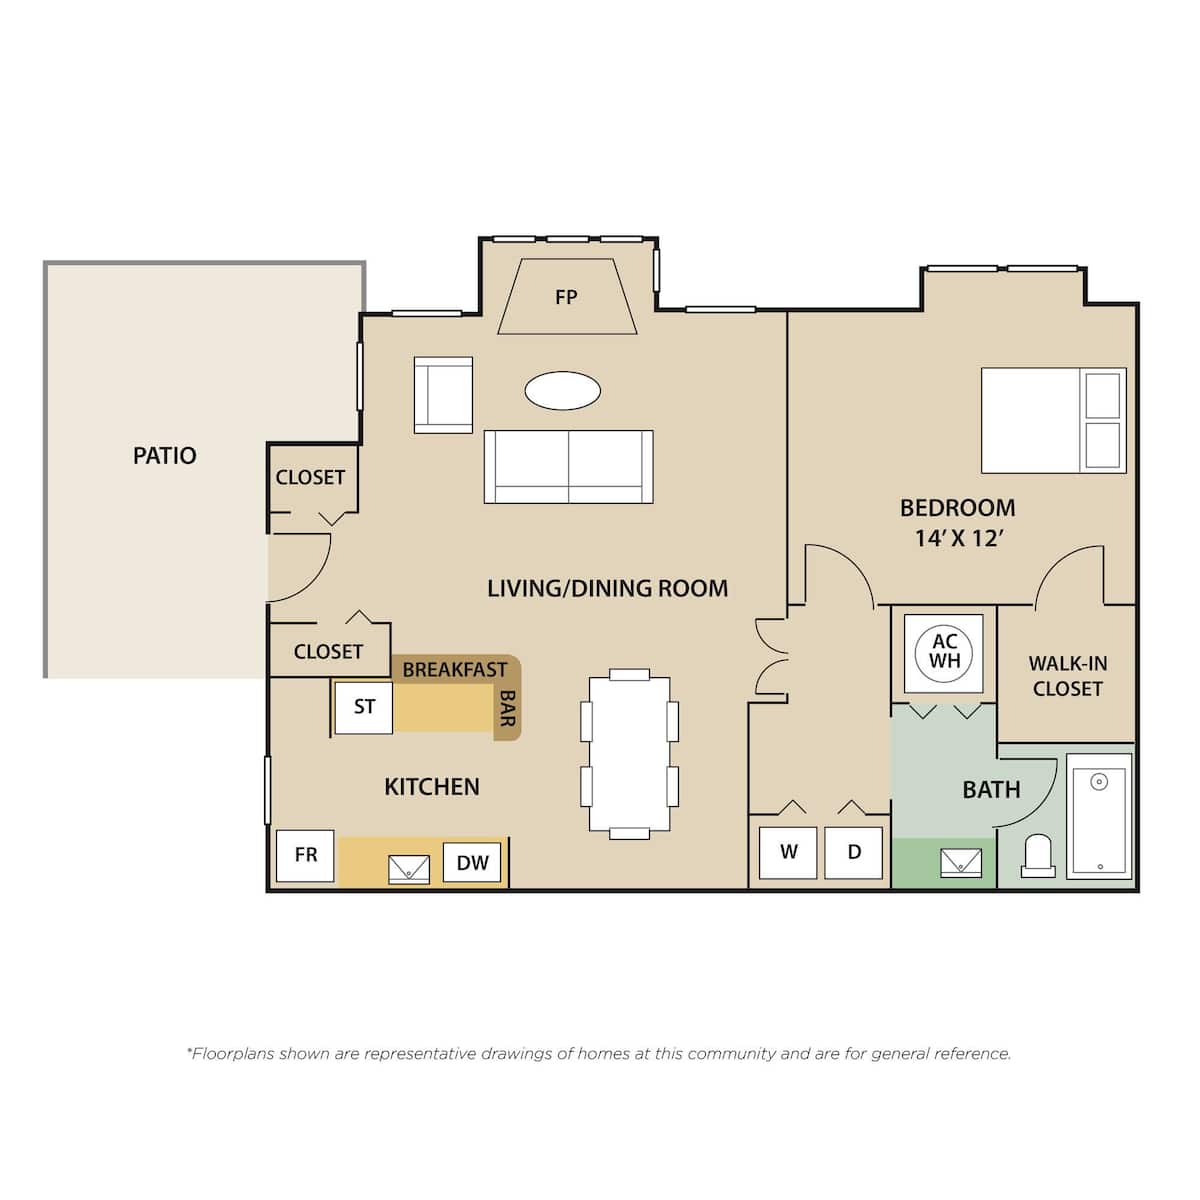 Floorplan diagram for Stamford, showing 1 bedroom